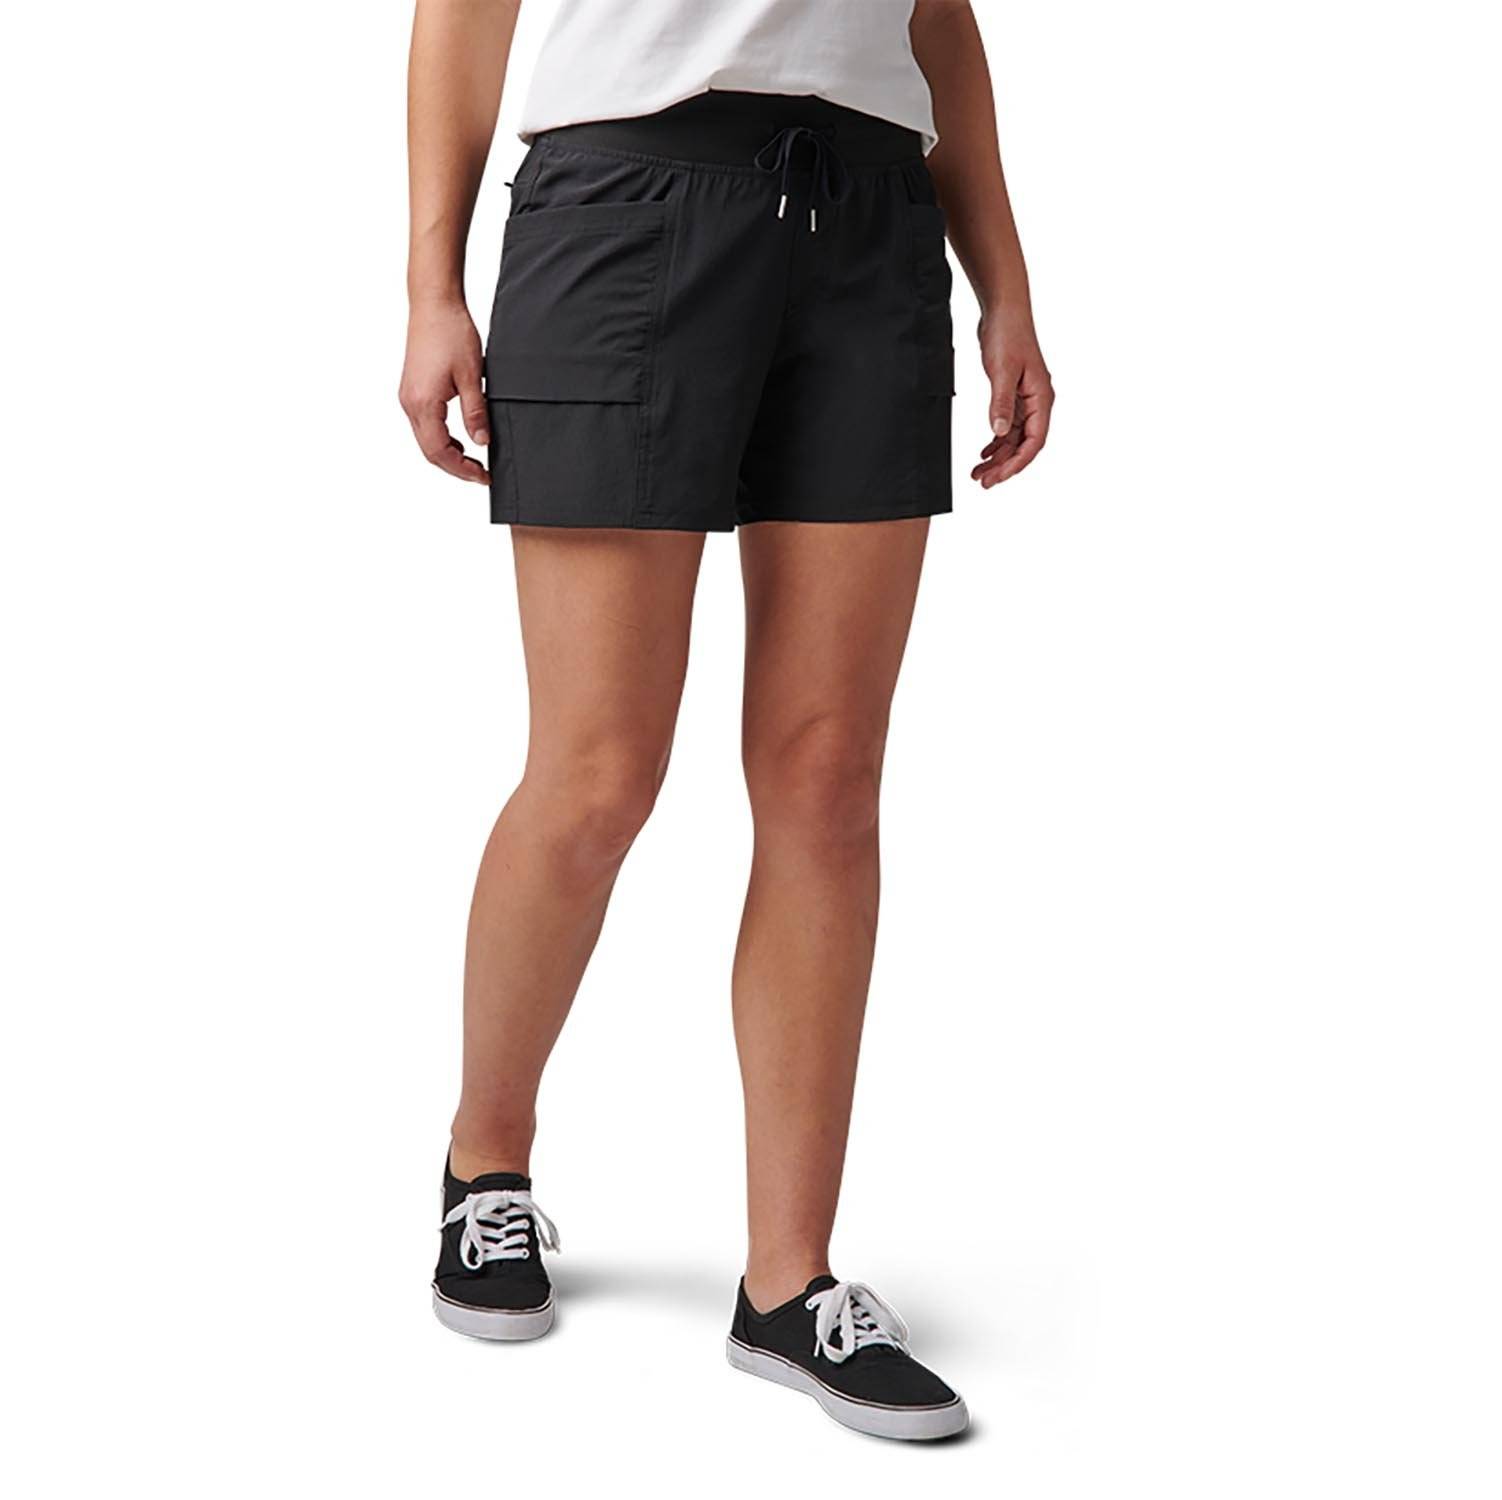 5.11 Tactical Women's Attina Shorts